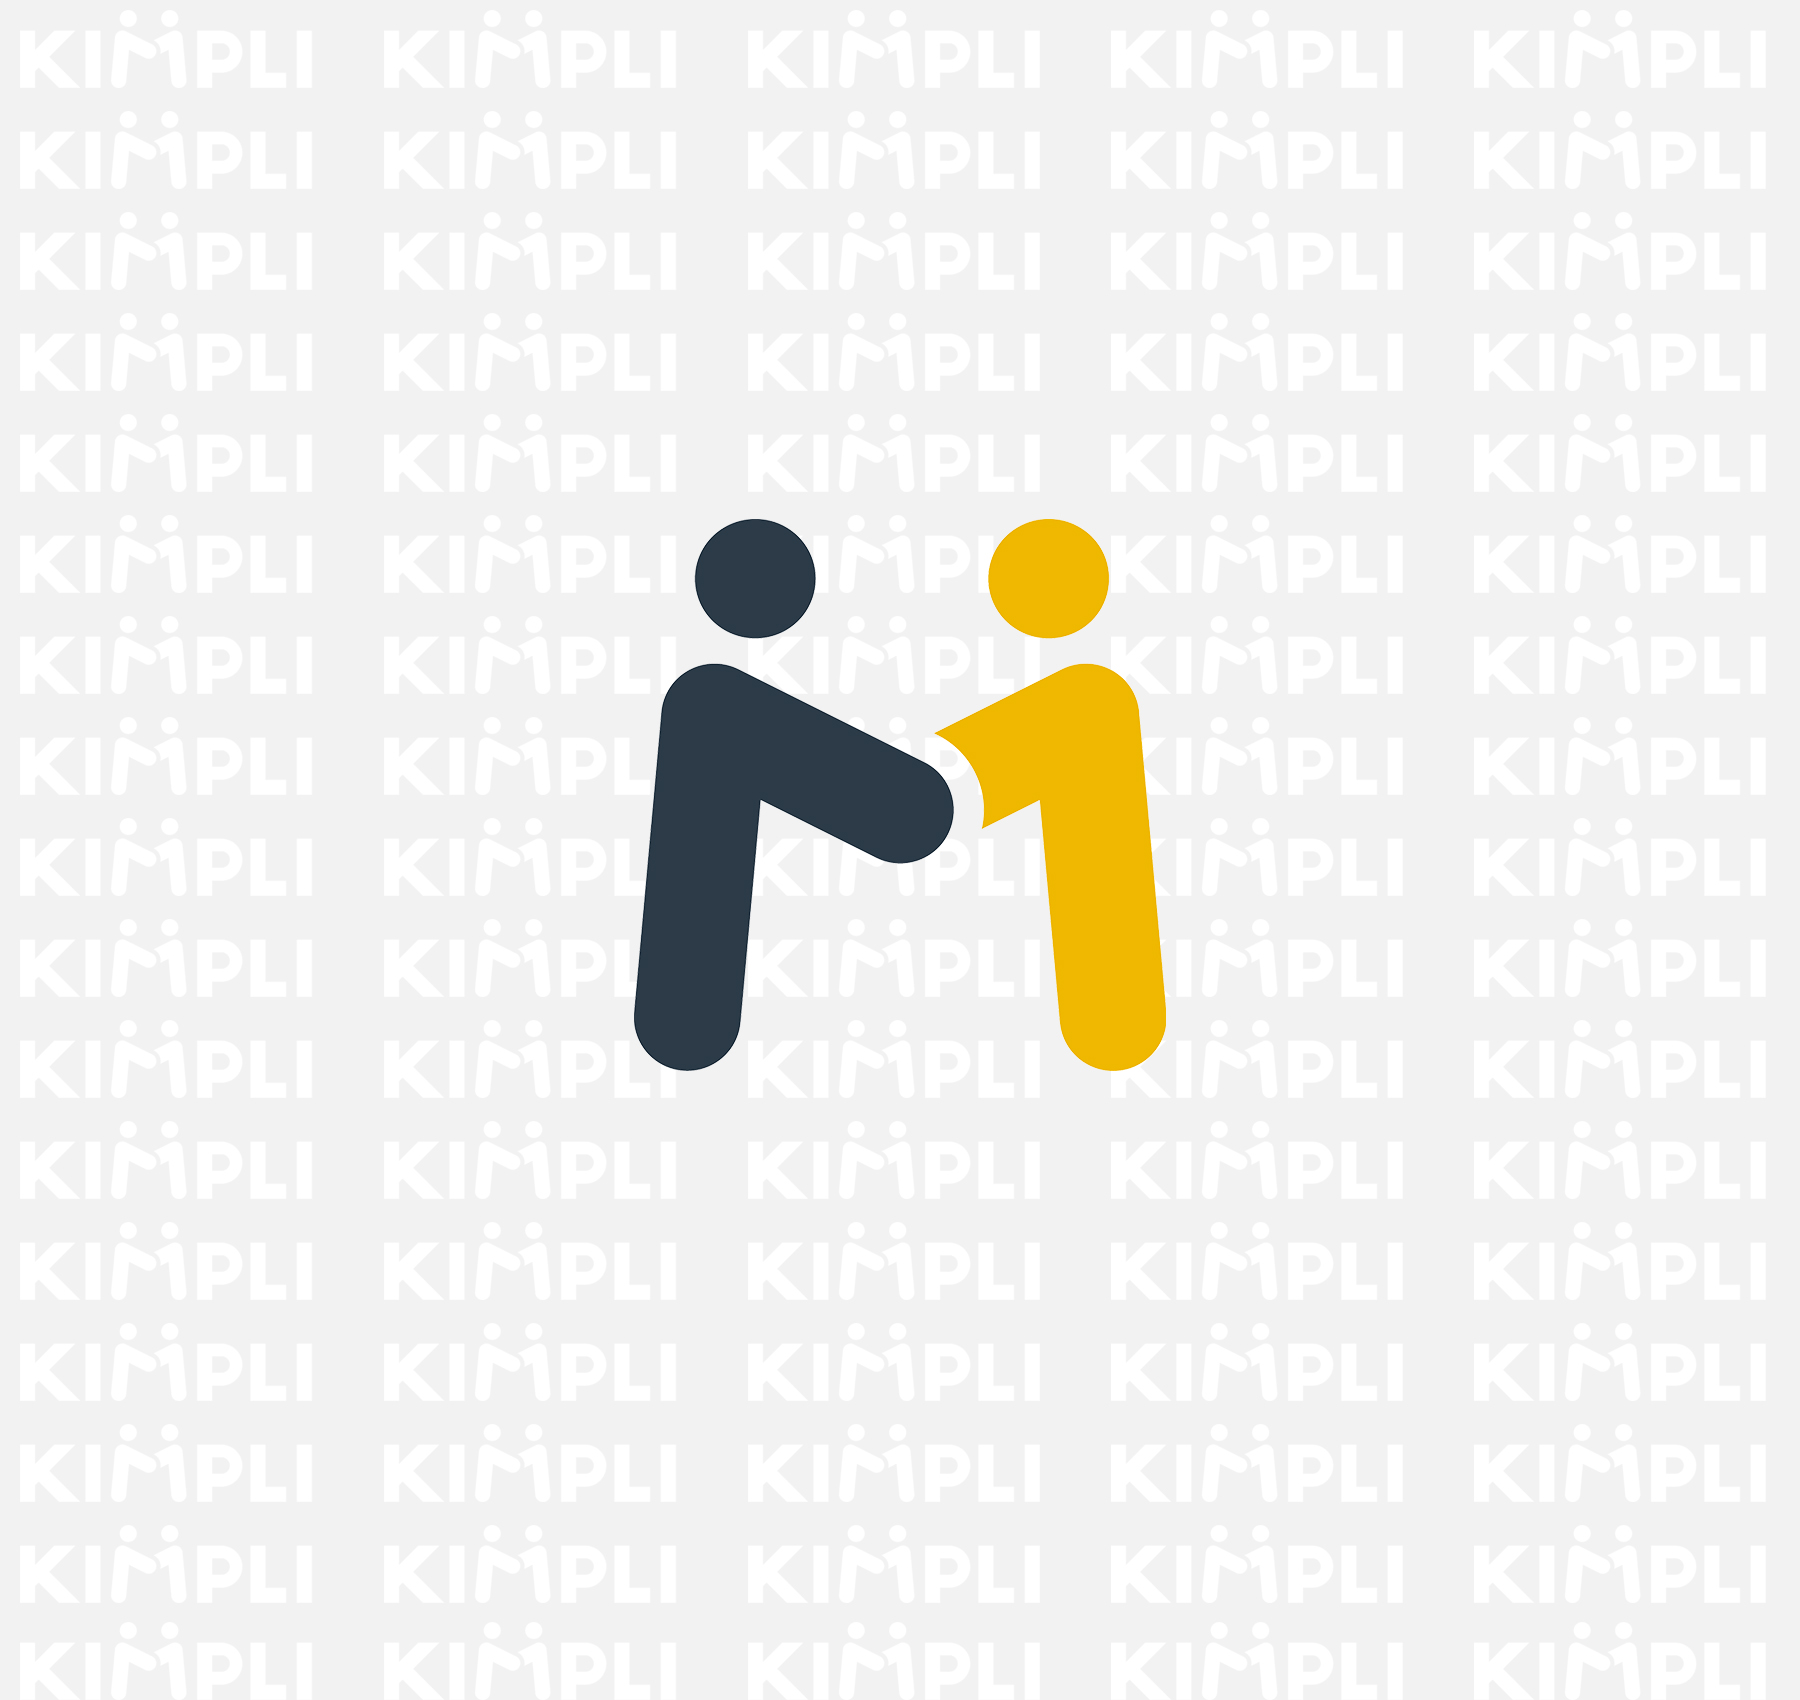  logo kimpli